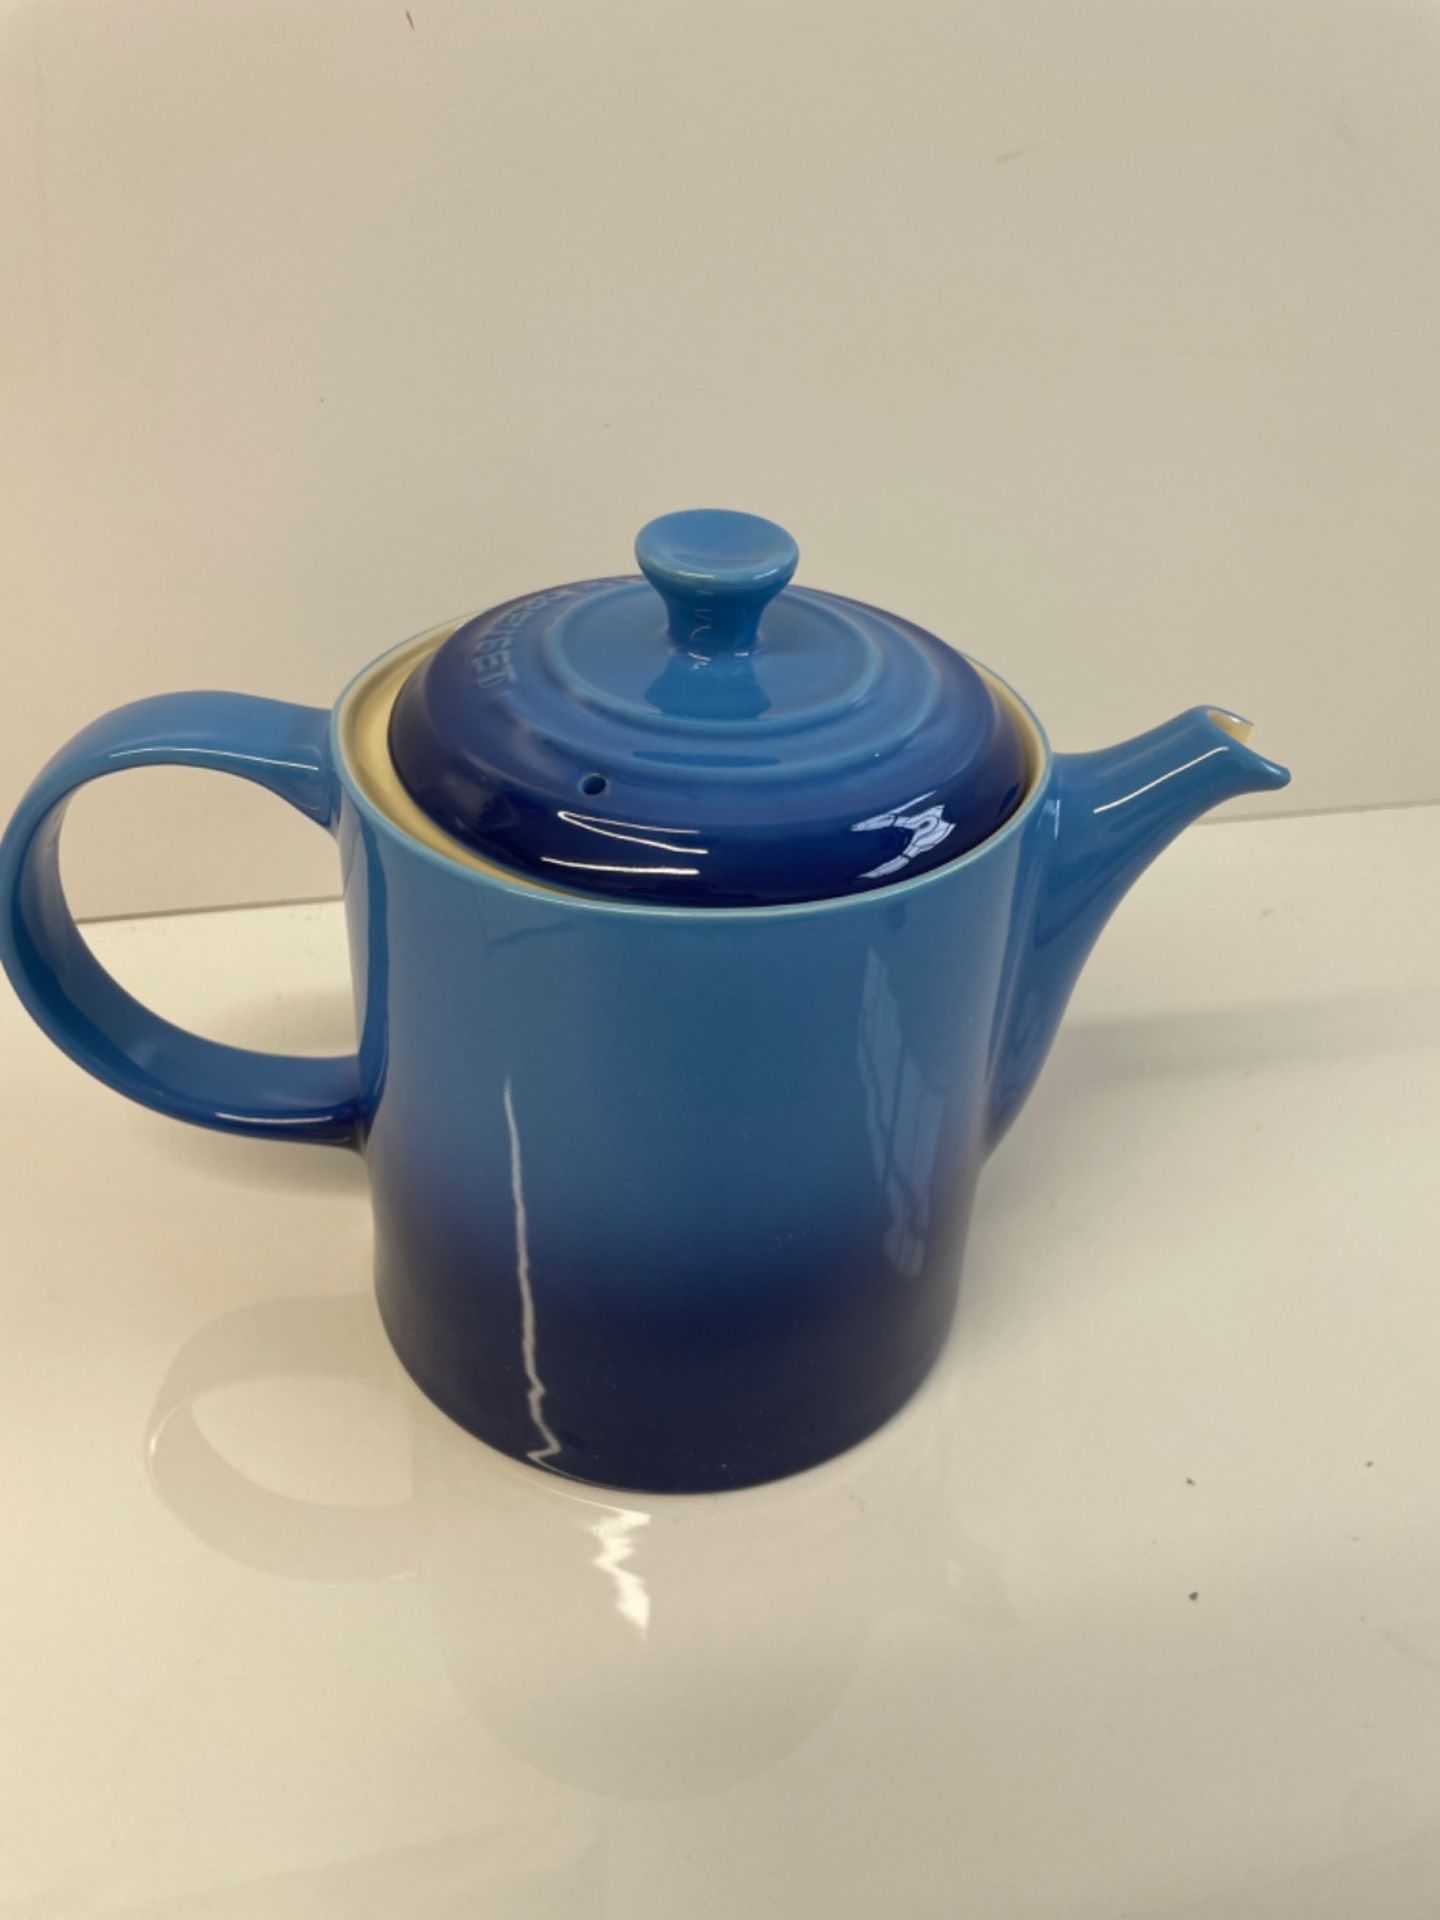 Le Creuset Grand Teapot, Stoneware, 1.3 Litres, Serves 4 Cups, Azure, 80703132200003 - Image 2 of 3